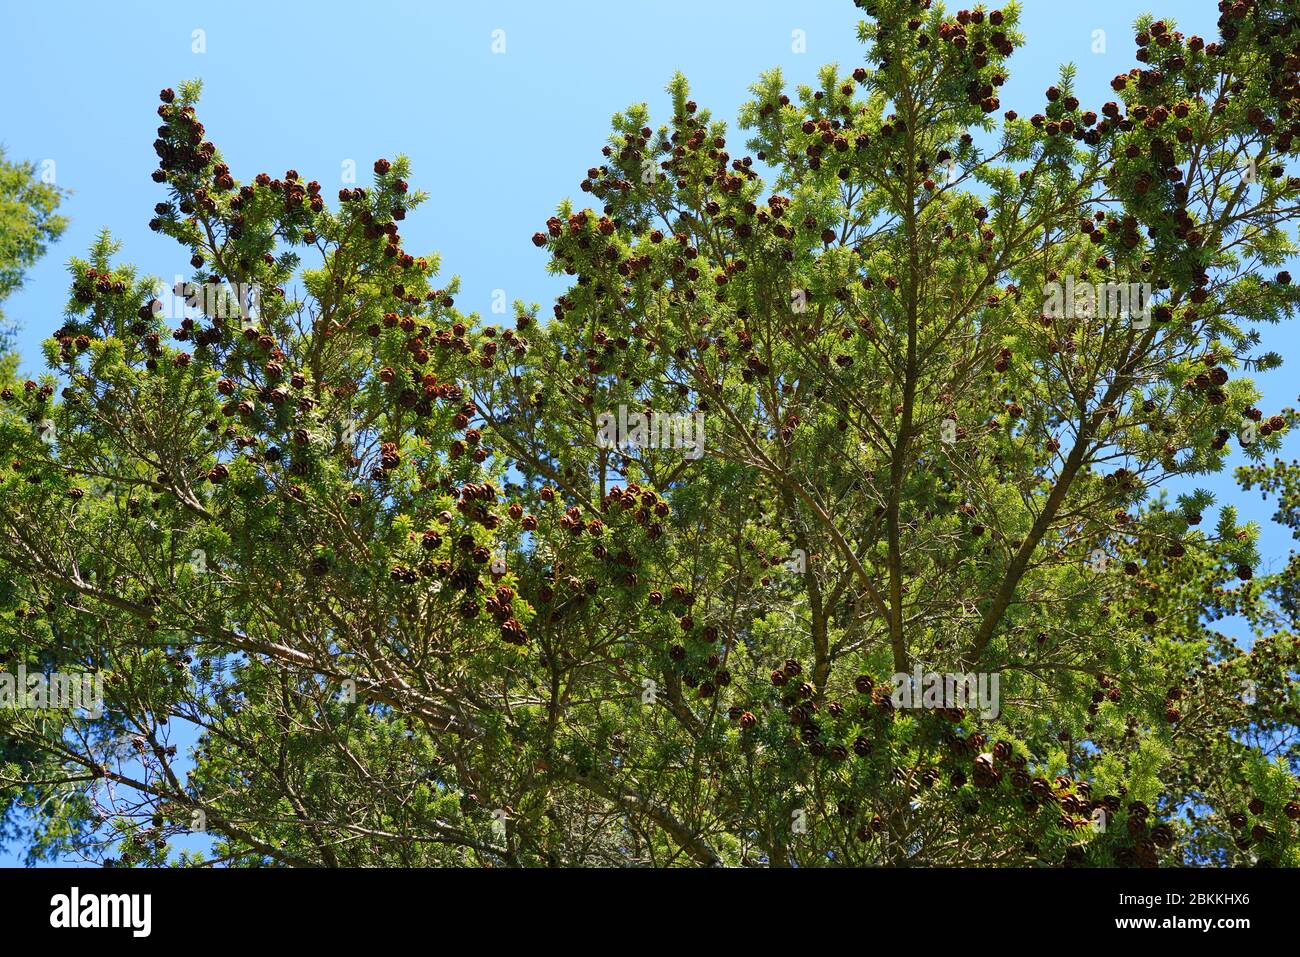 Small pinecones on branches of a Hemlock pine tree (tsuga) Stock Photo